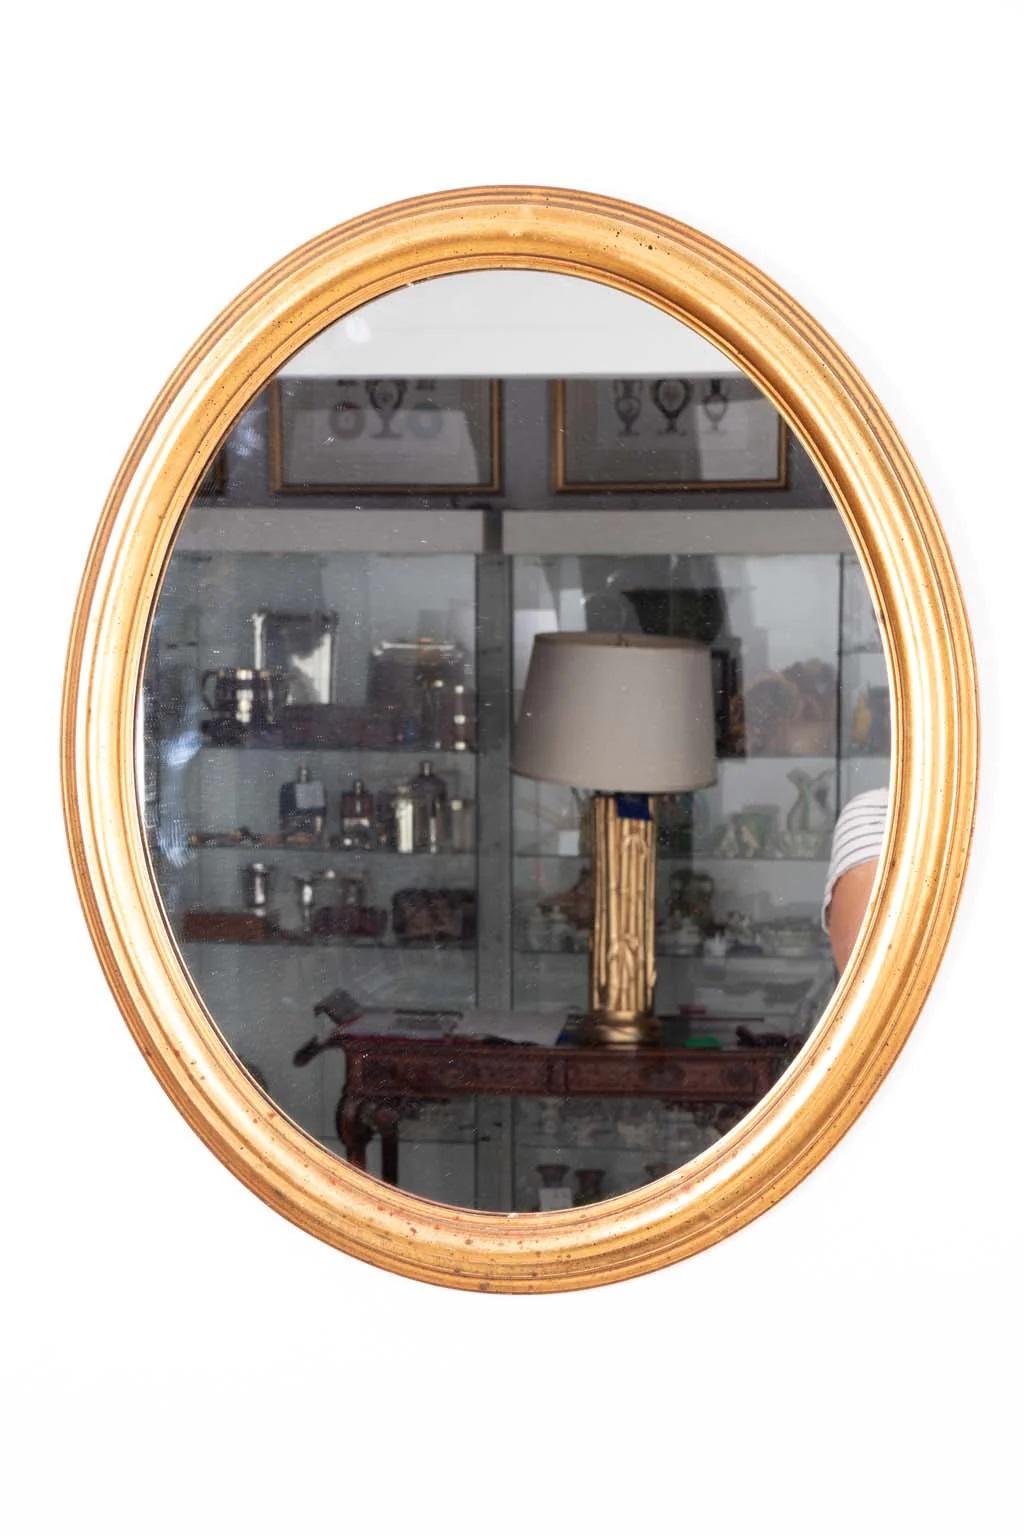 Italian gilt wood oval mirror. Great size, Measures 24